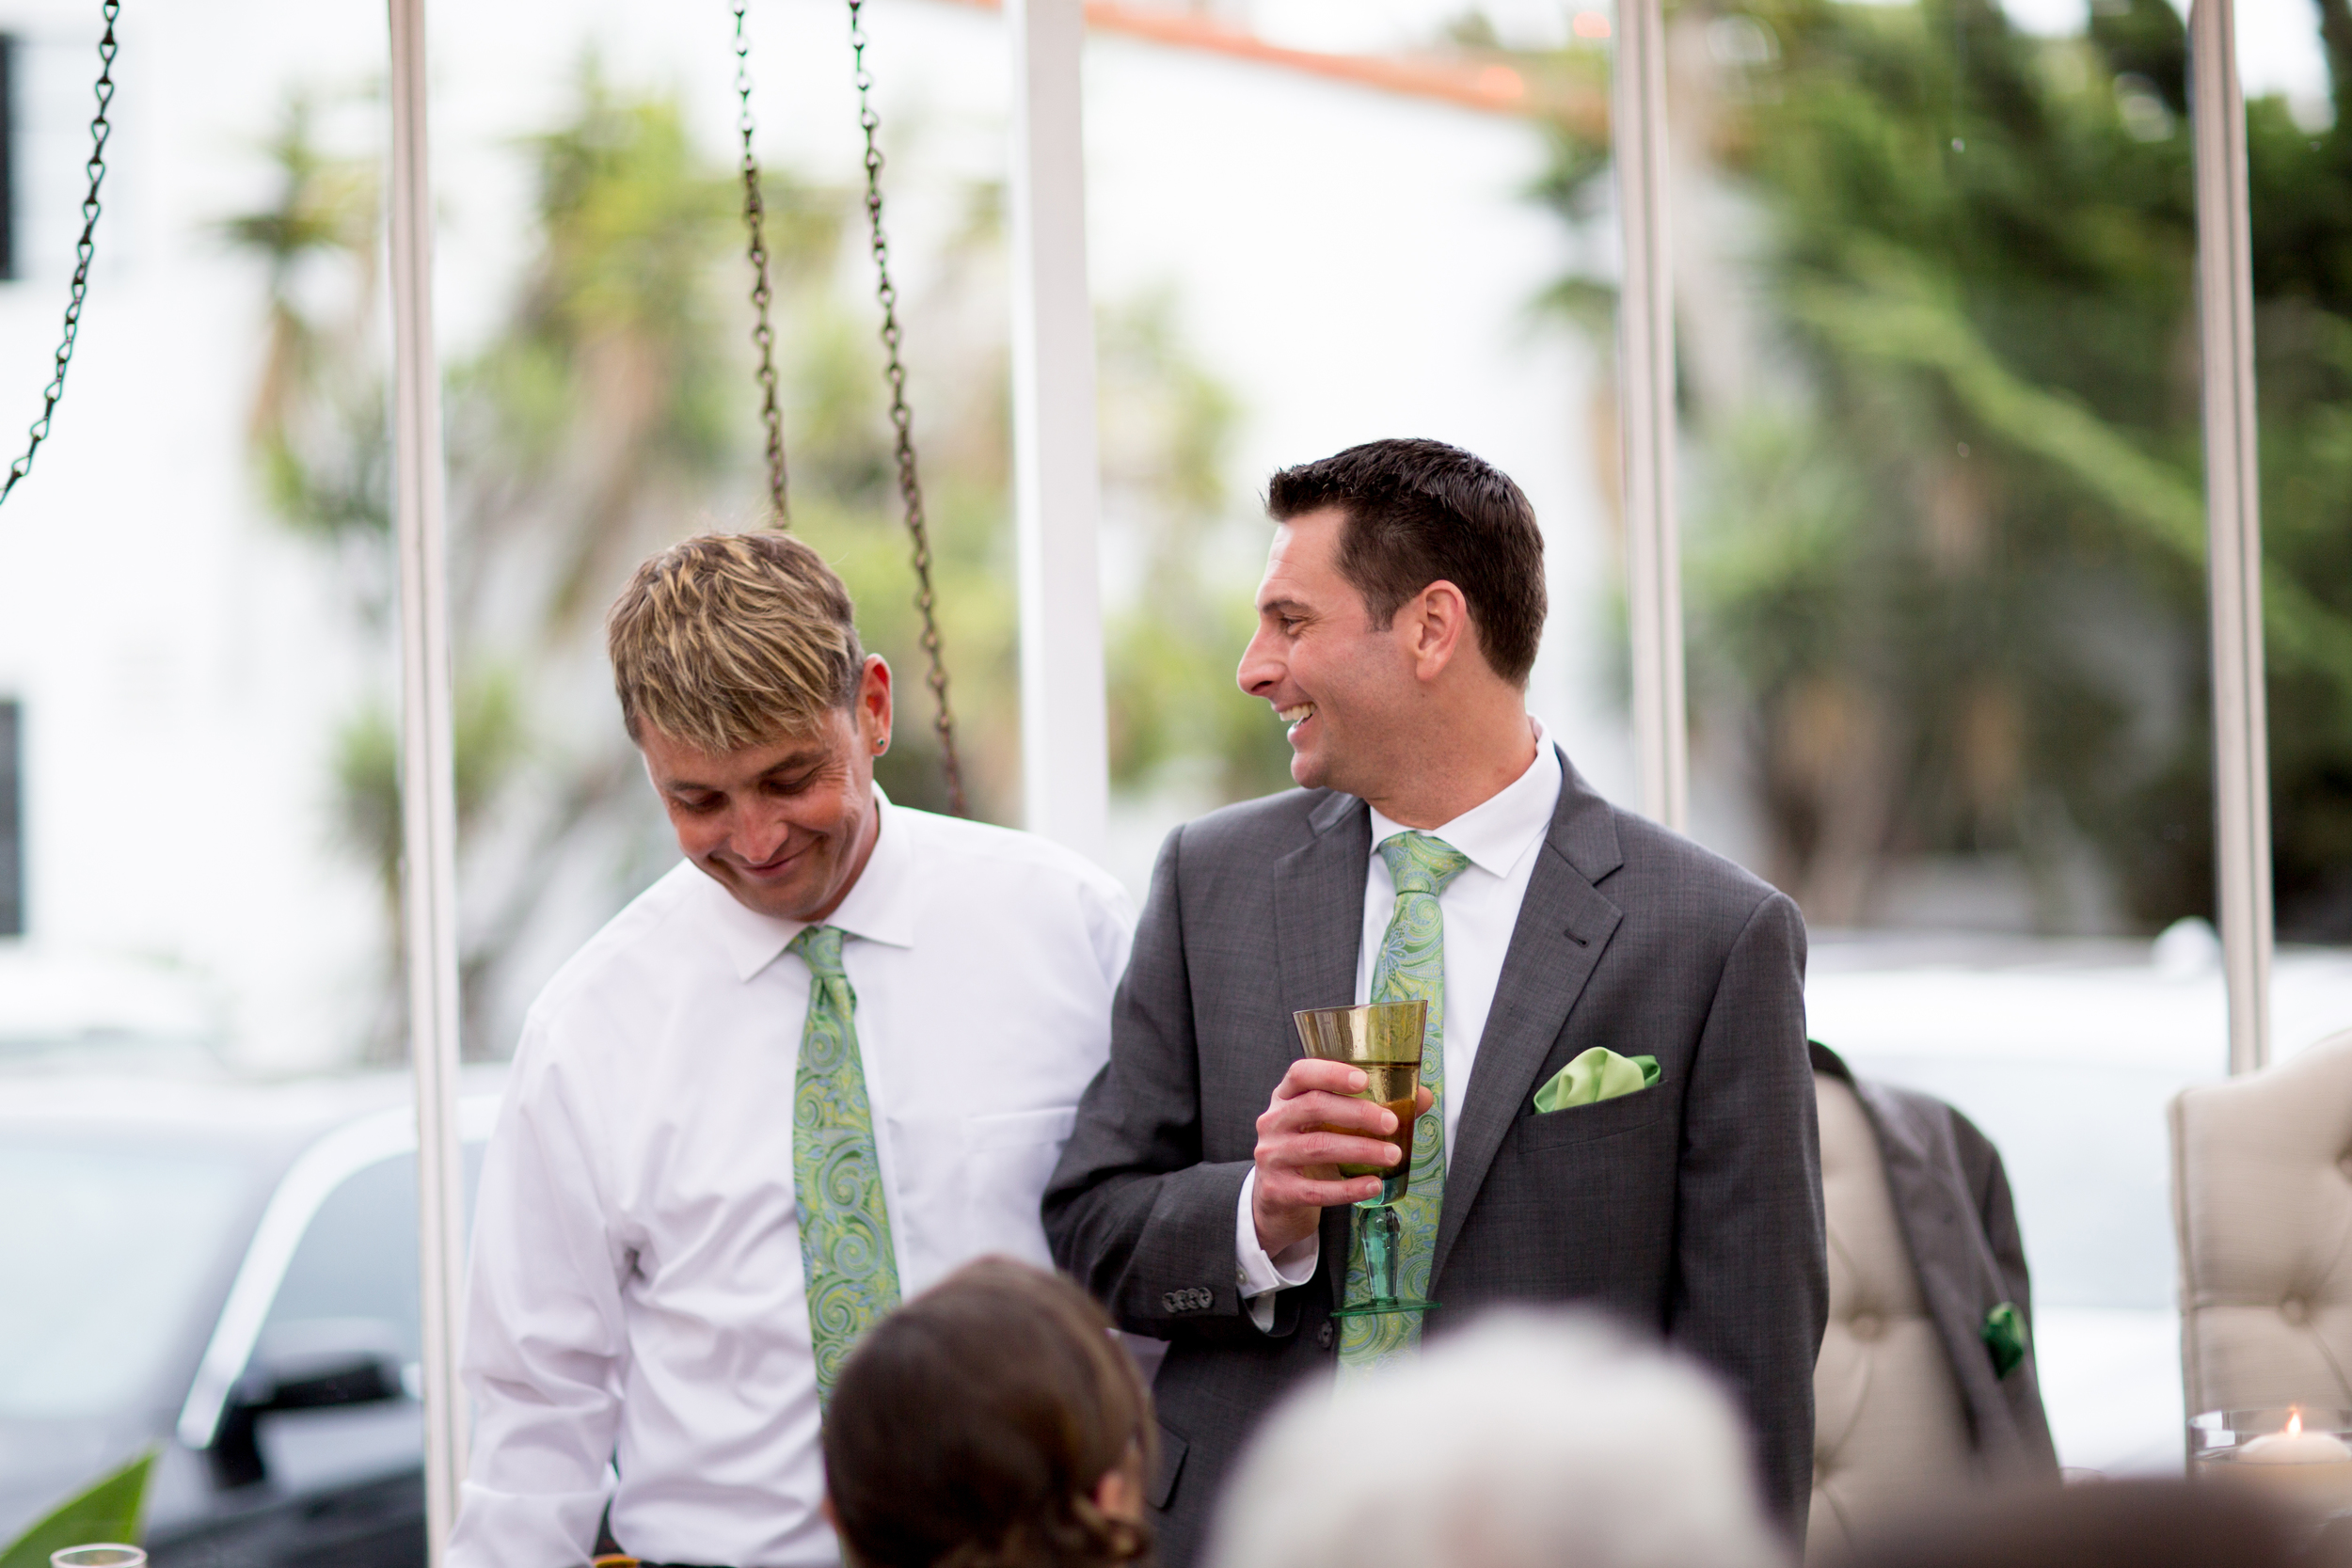 Wedding Ceremony at the Santa Barbara Courthouse | Miriam Lindbeck | Photography by Anna Costa